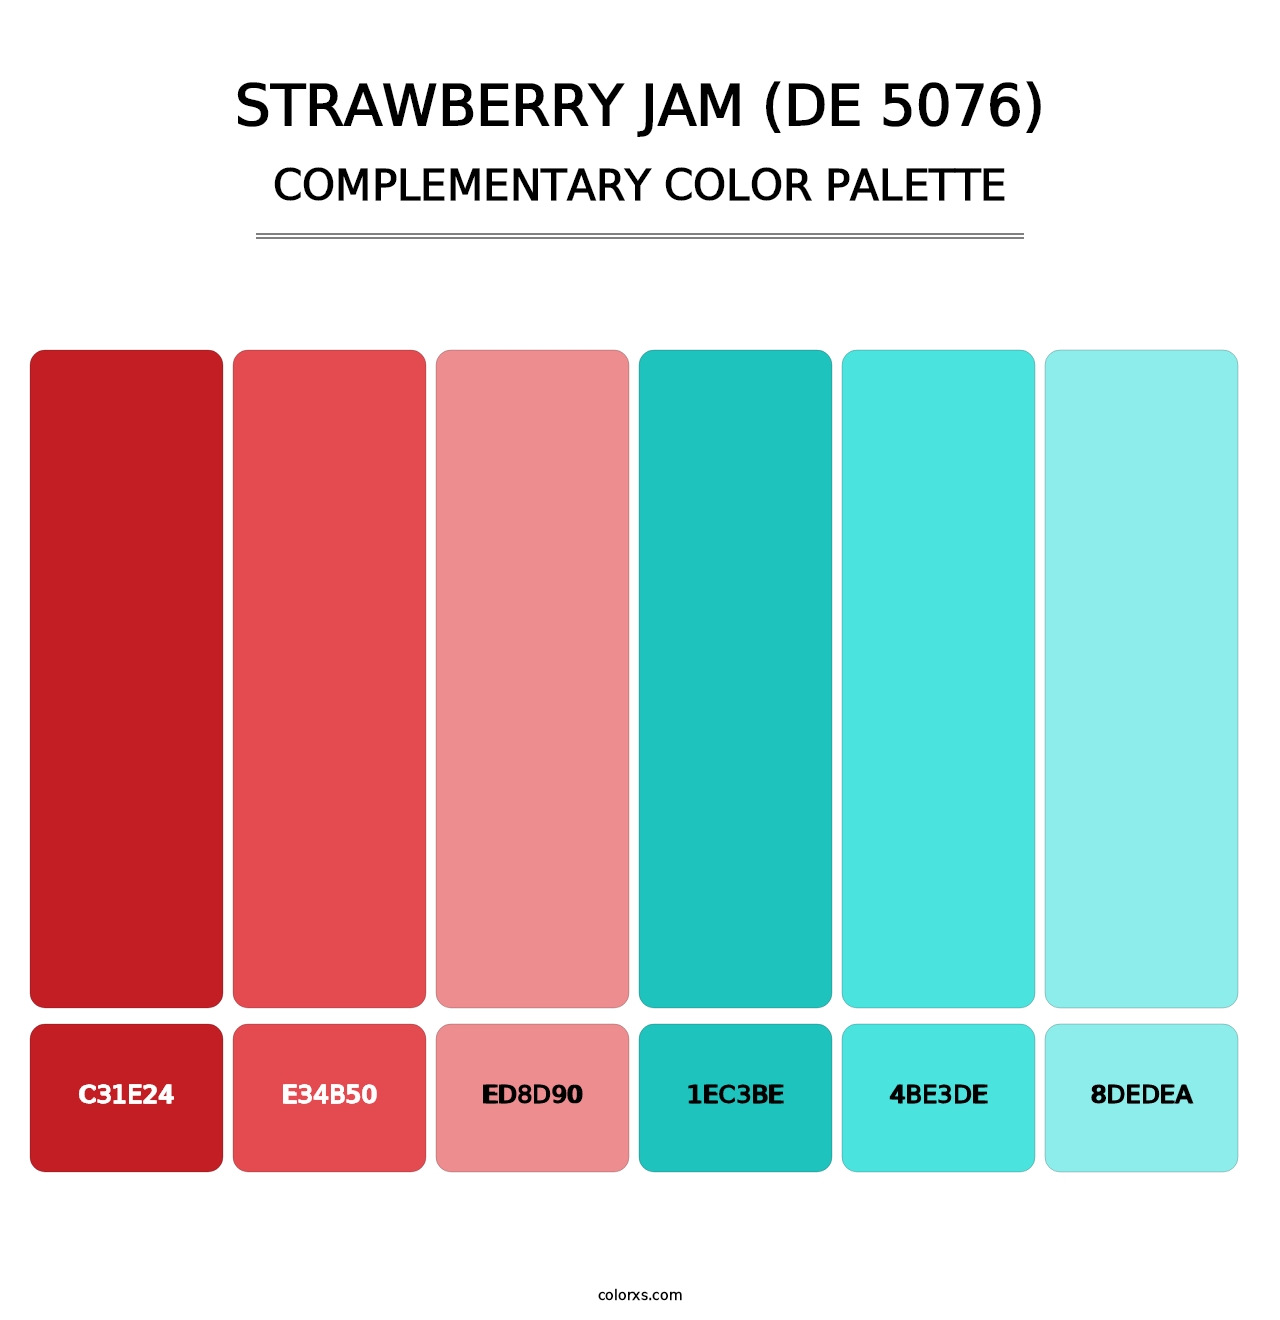 Strawberry Jam (DE 5076) - Complementary Color Palette